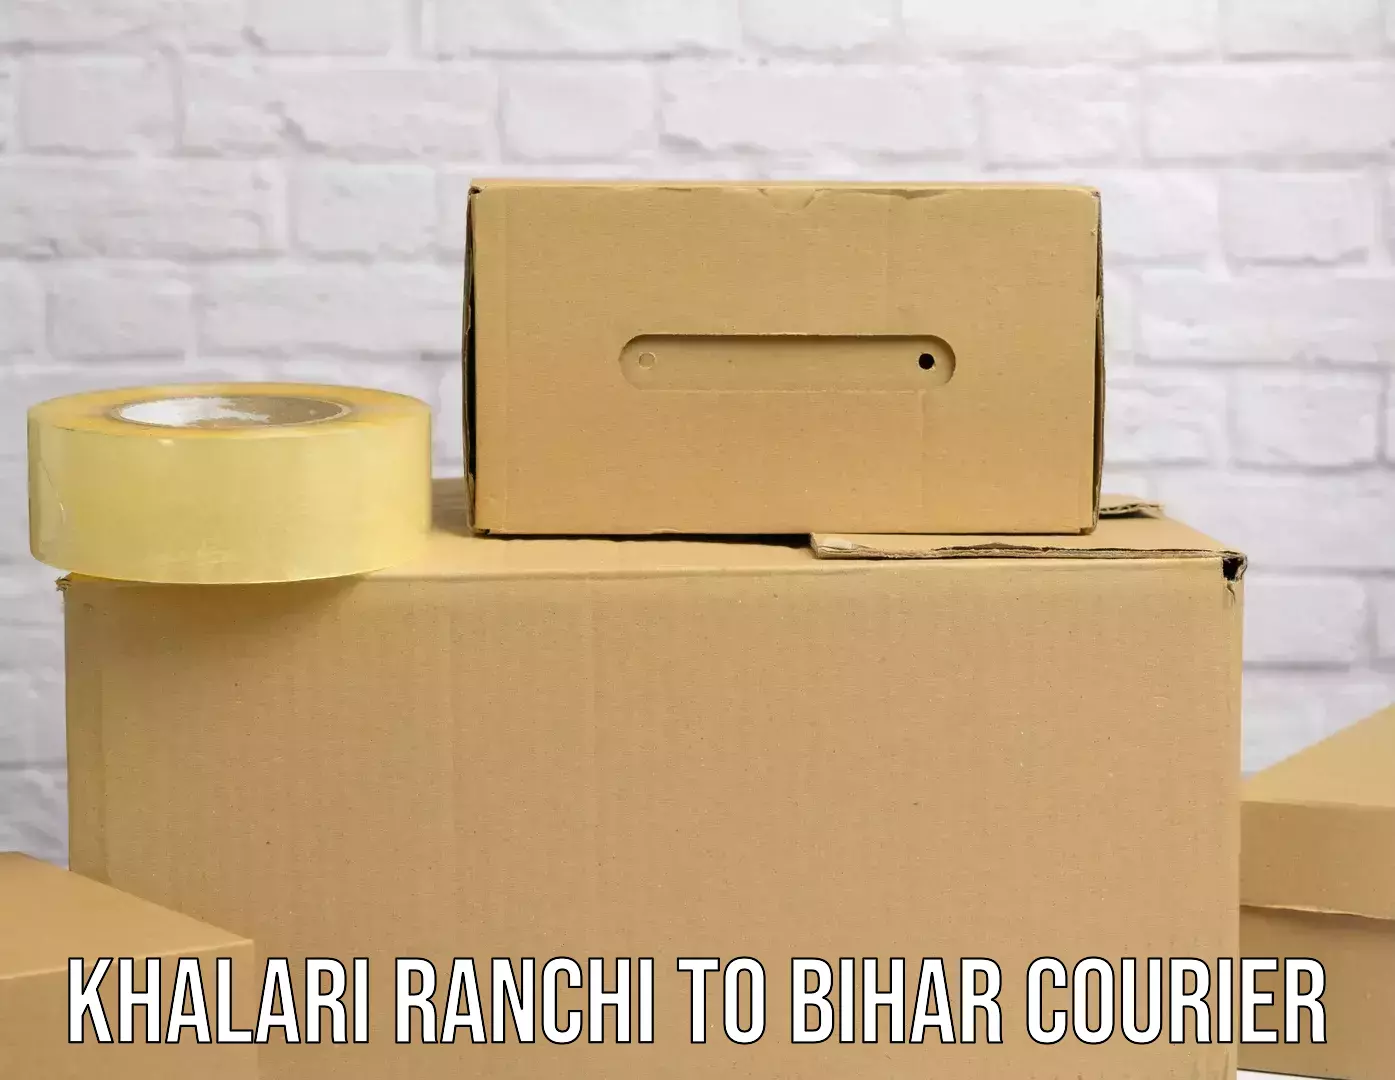 Reliable delivery network Khalari Ranchi to Bihar